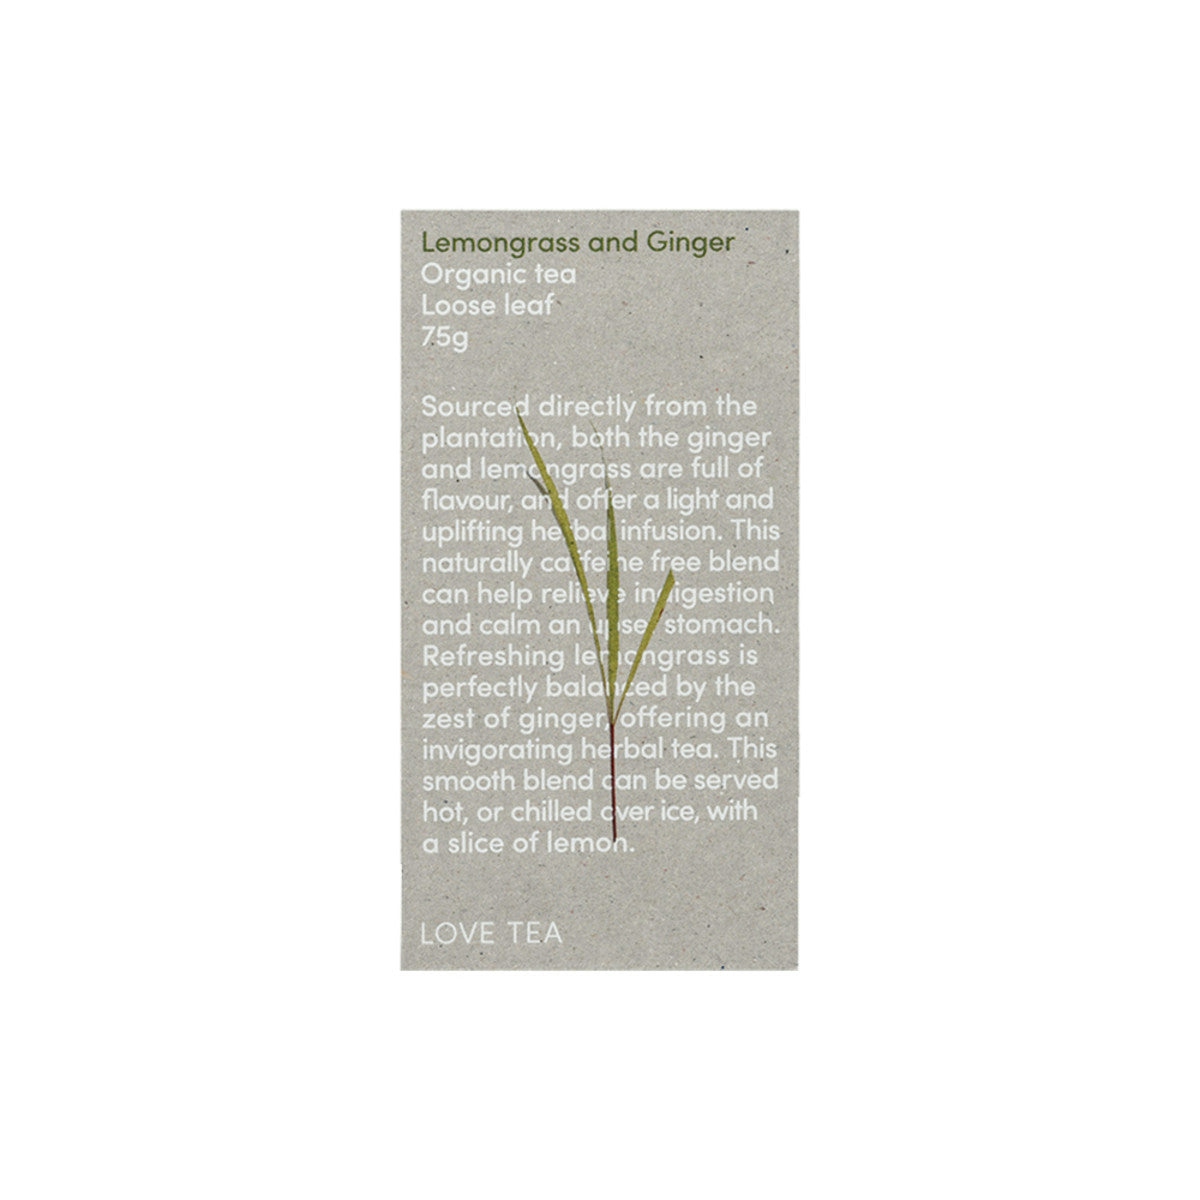 image of Love Tea Organic Lemongrass & Ginger Tea Loose Leaf 75g on white background 